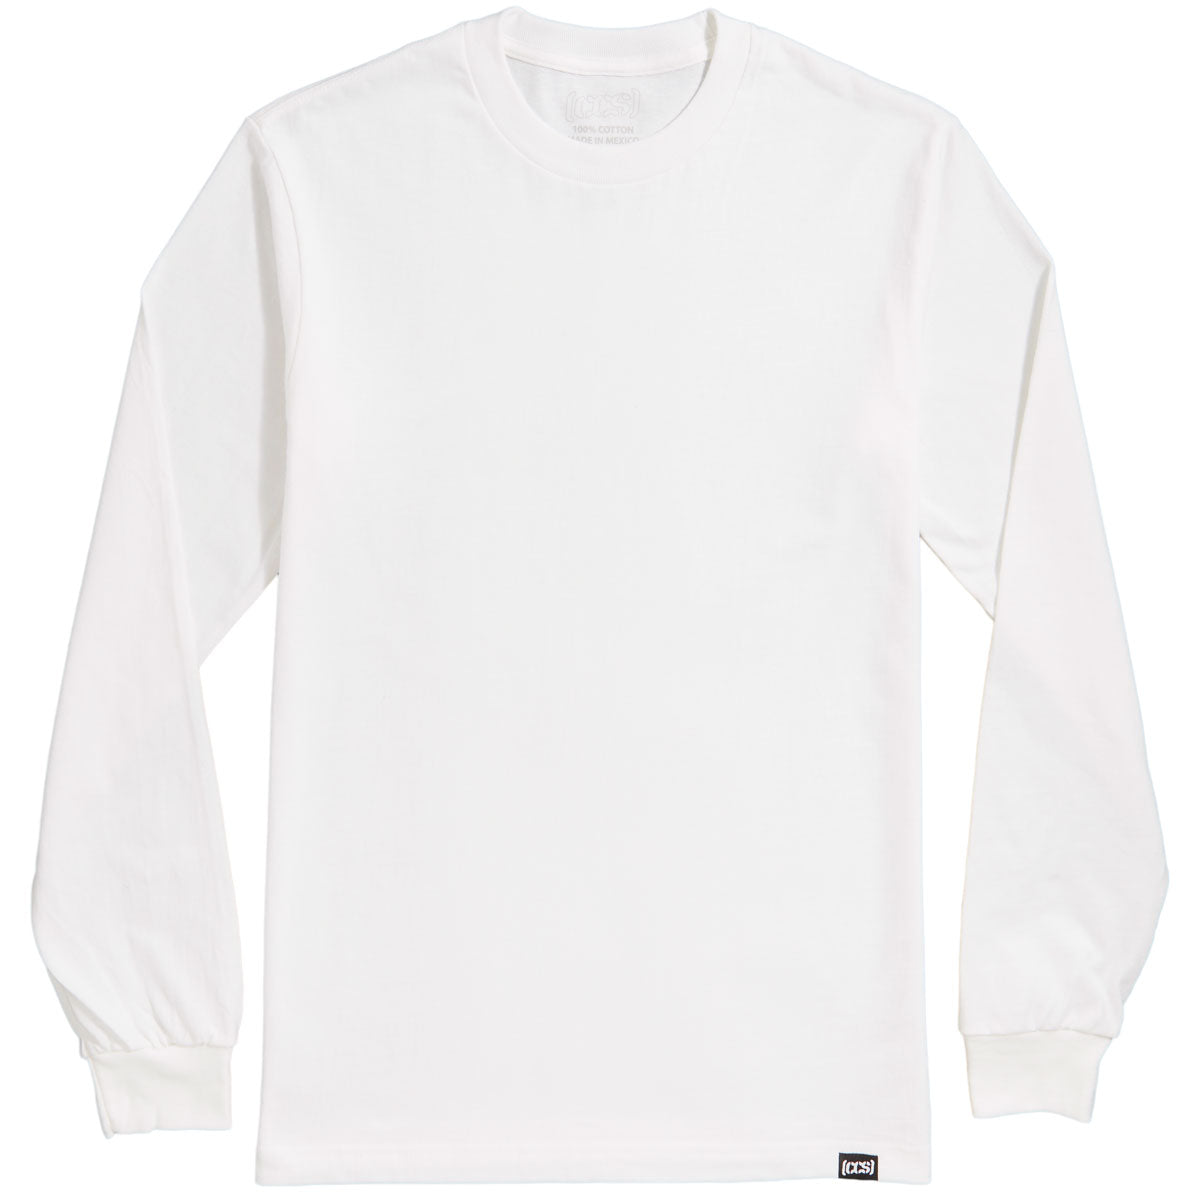 CCS OG Heavyweight Long Sleeve T-Shirt - White image 1